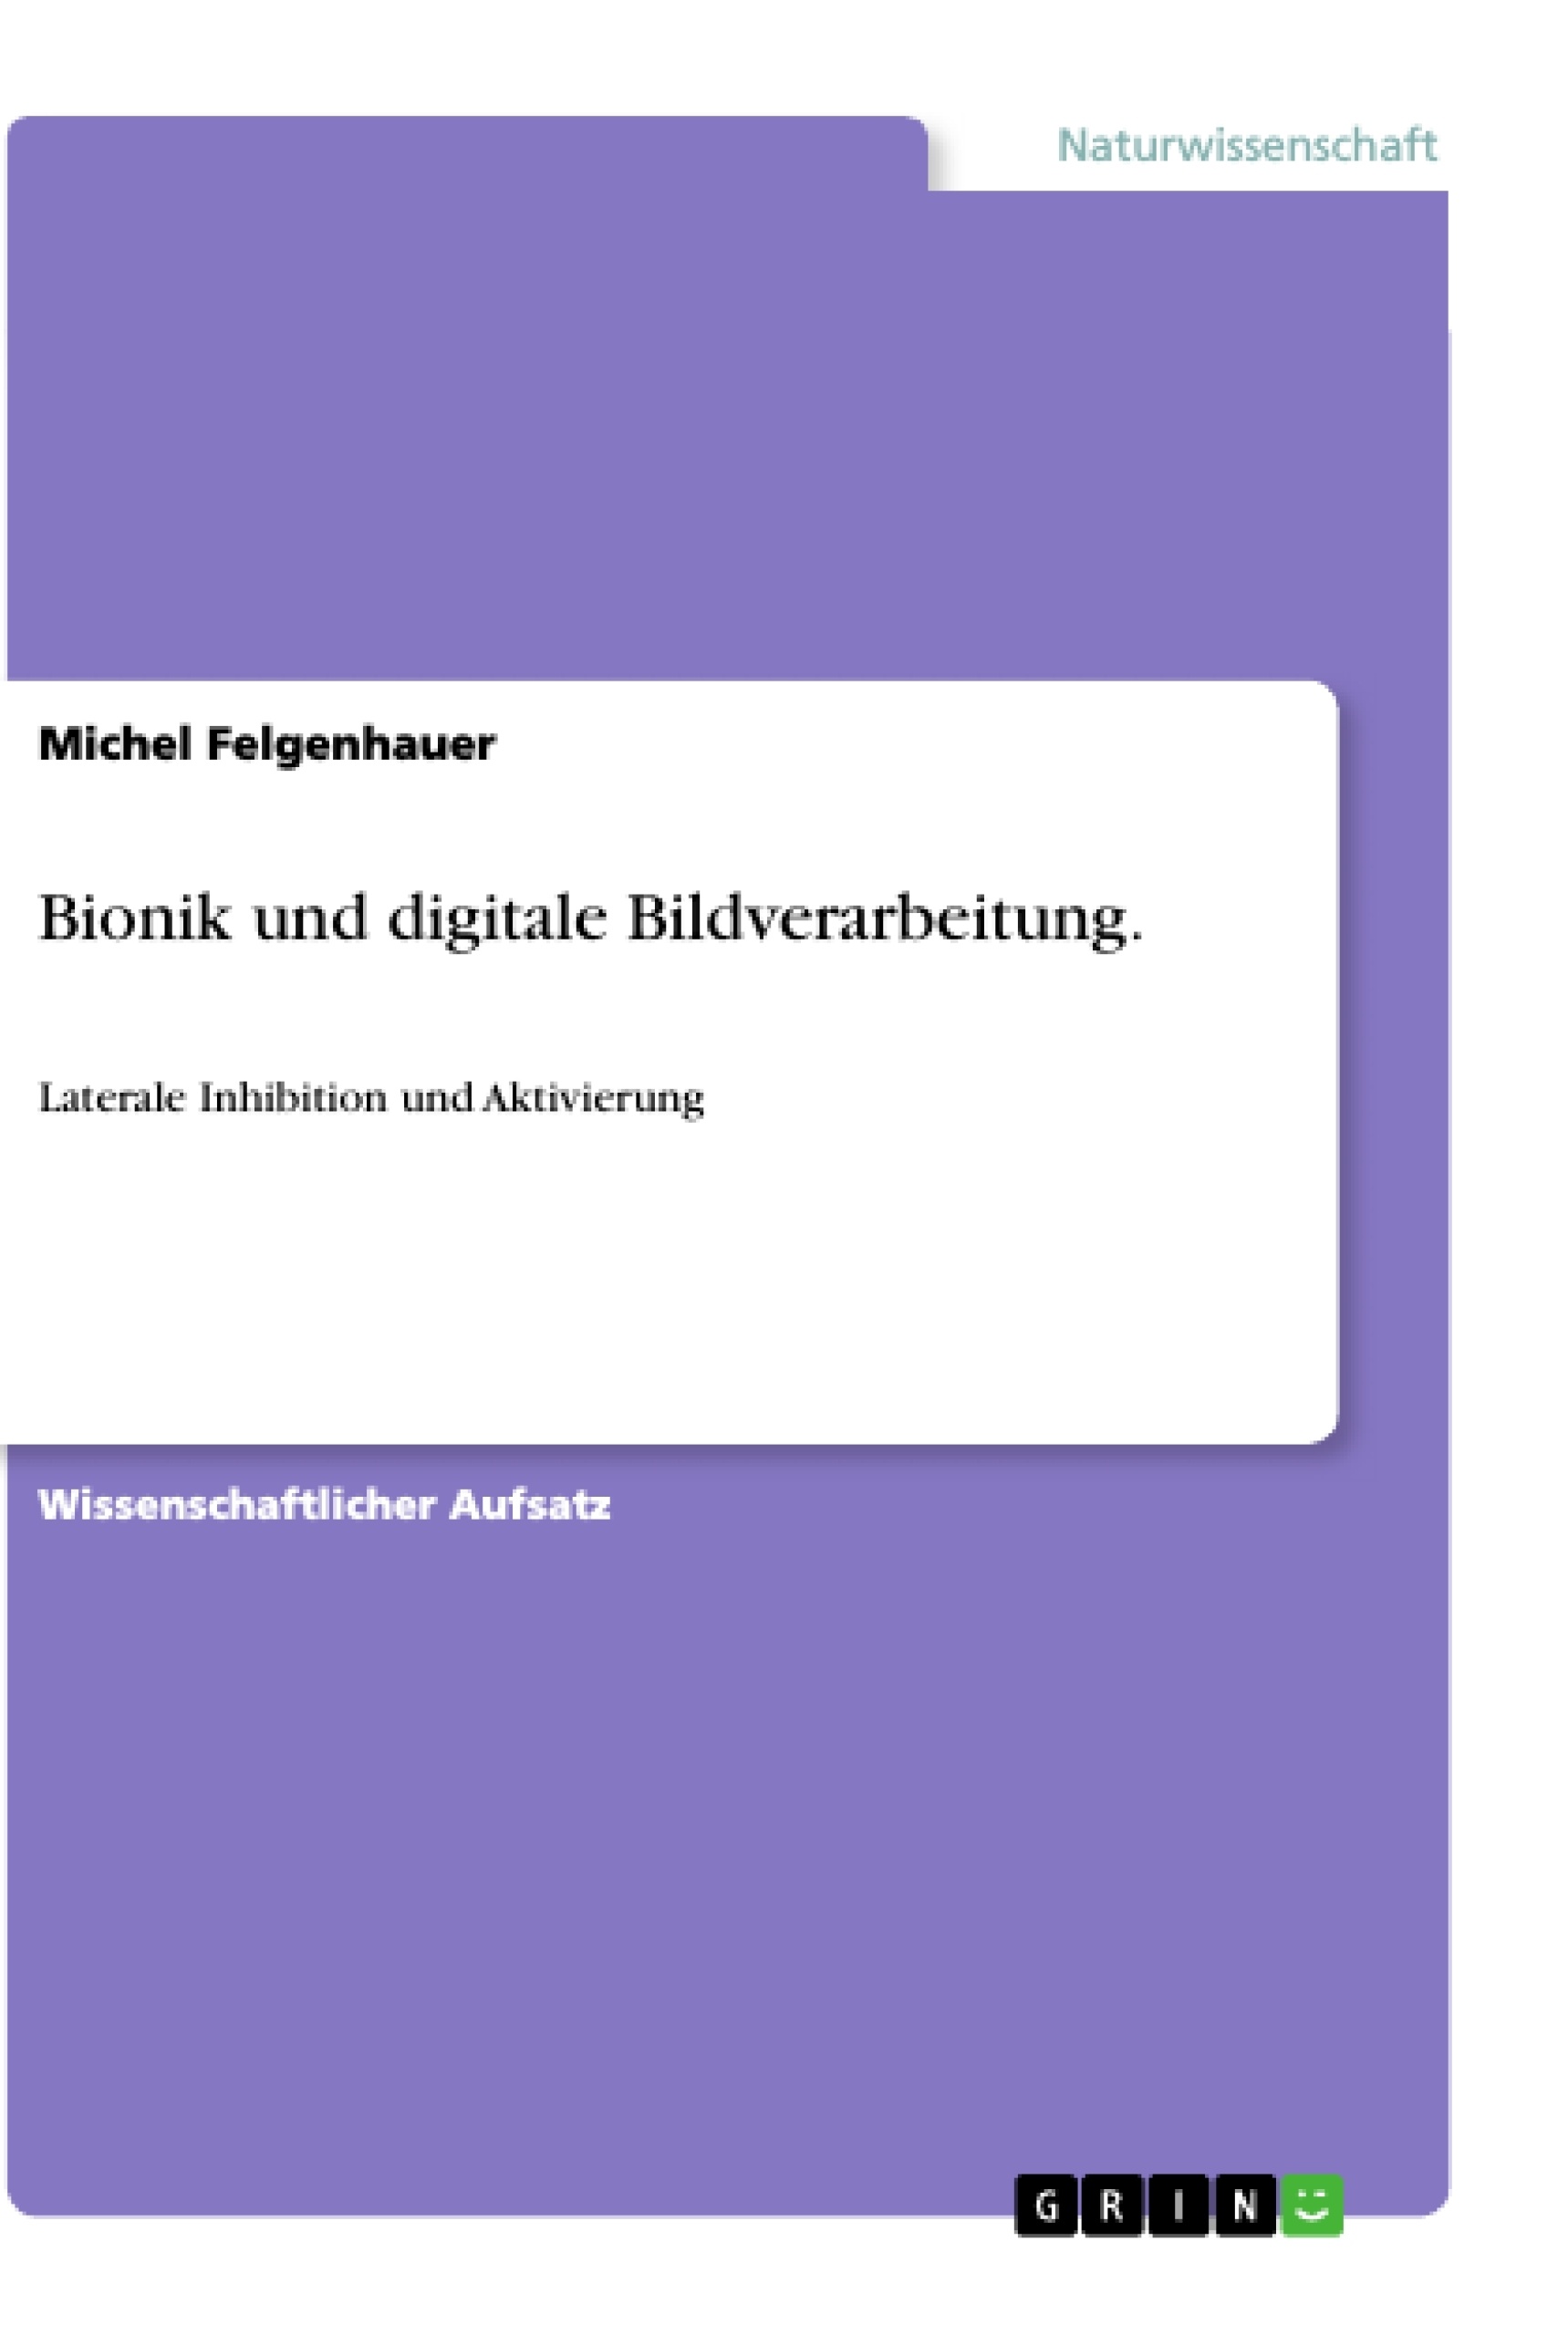 Título: Bionik und digitale Bildverarbeitung.